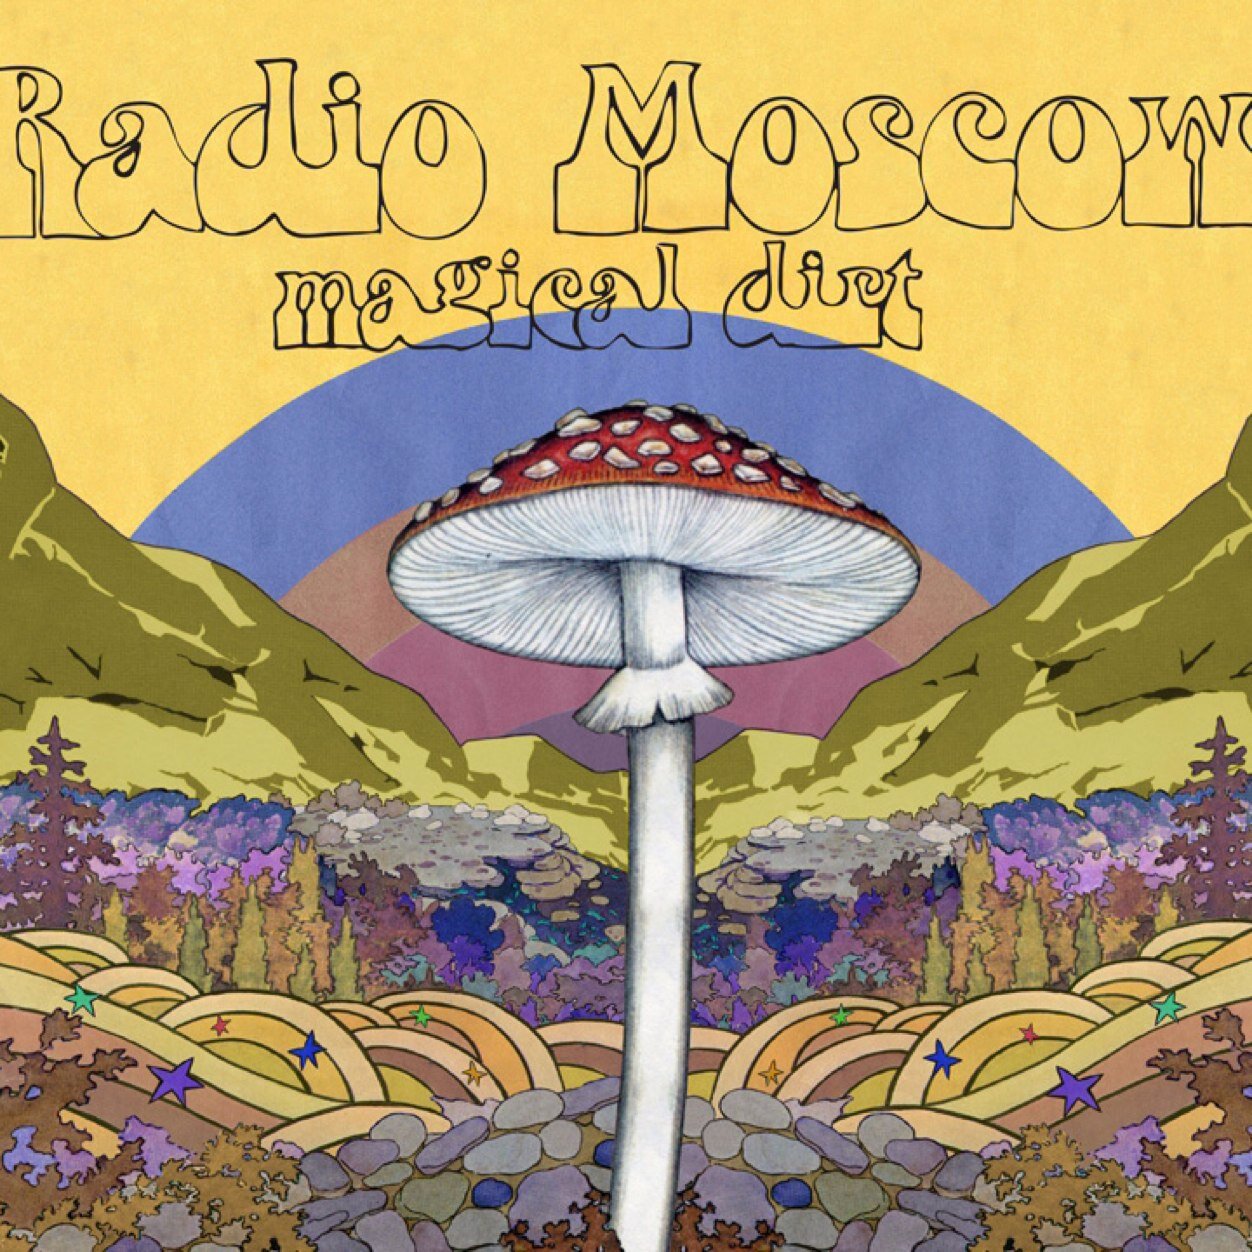 Radio Moscow Profile